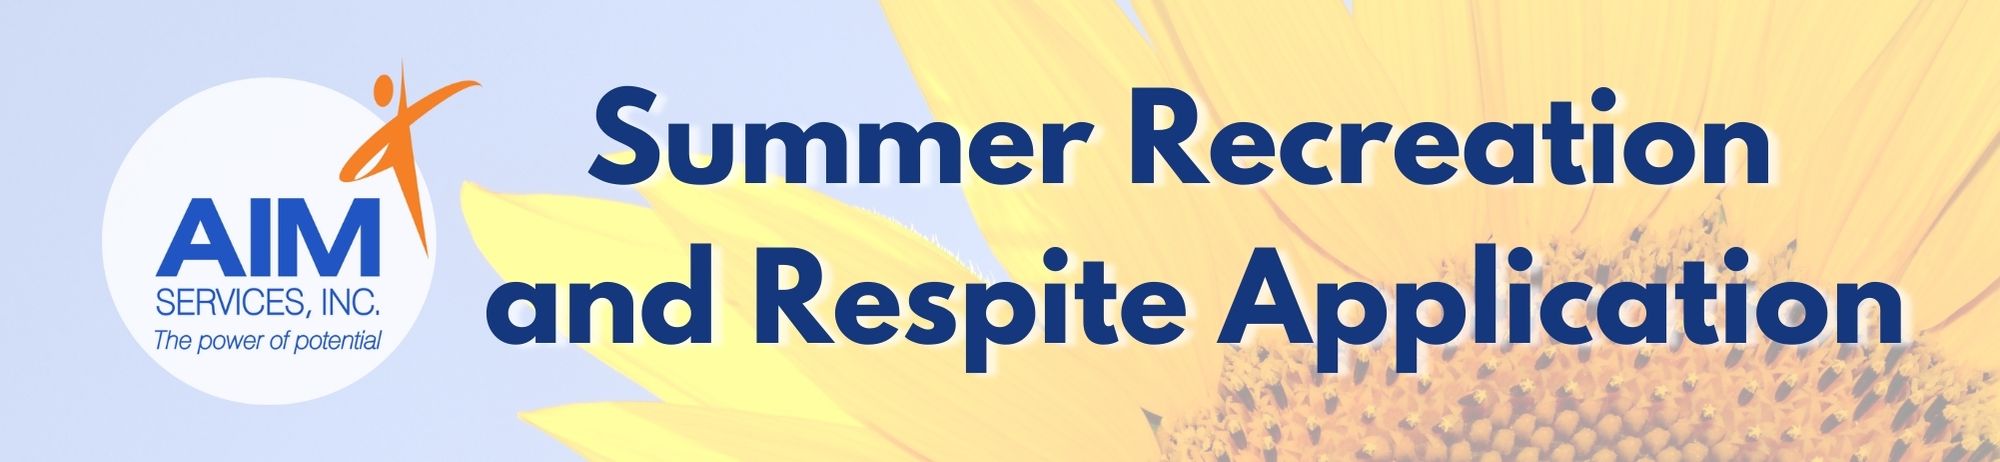 Summer Recreation and Respite Application banner